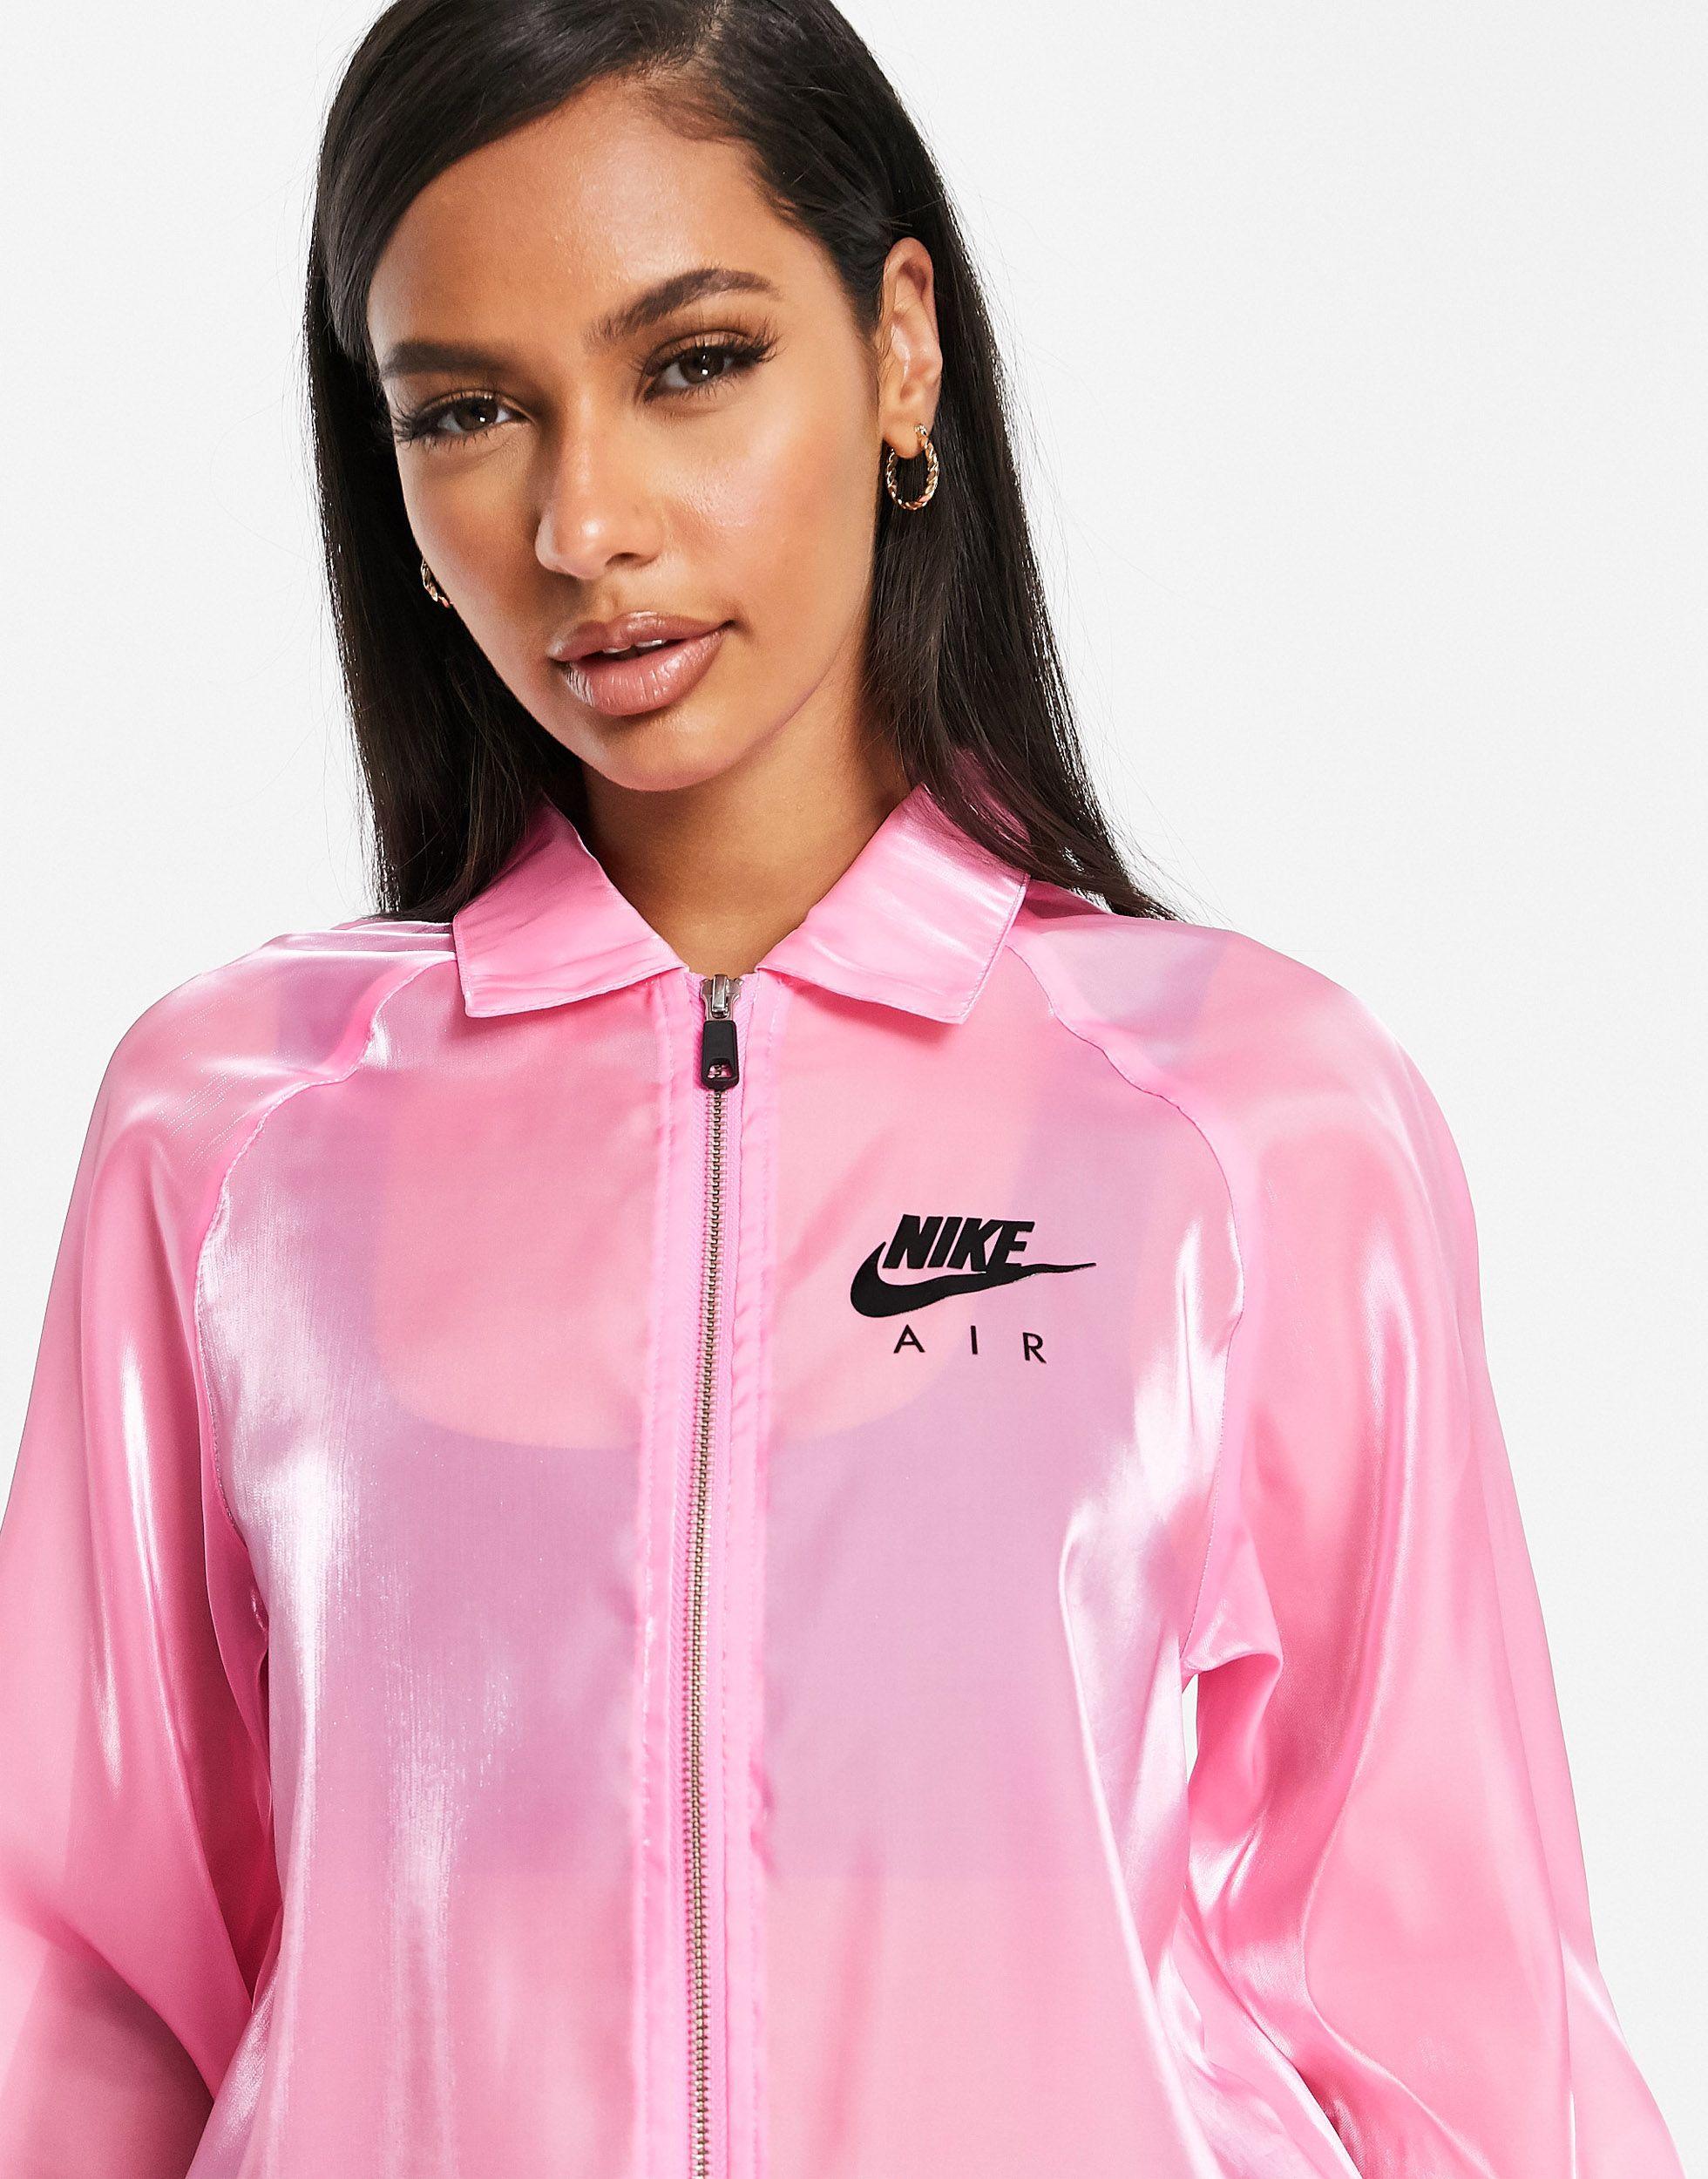 Nike – Air – Transparente Jacke in Pink | Lyst AT